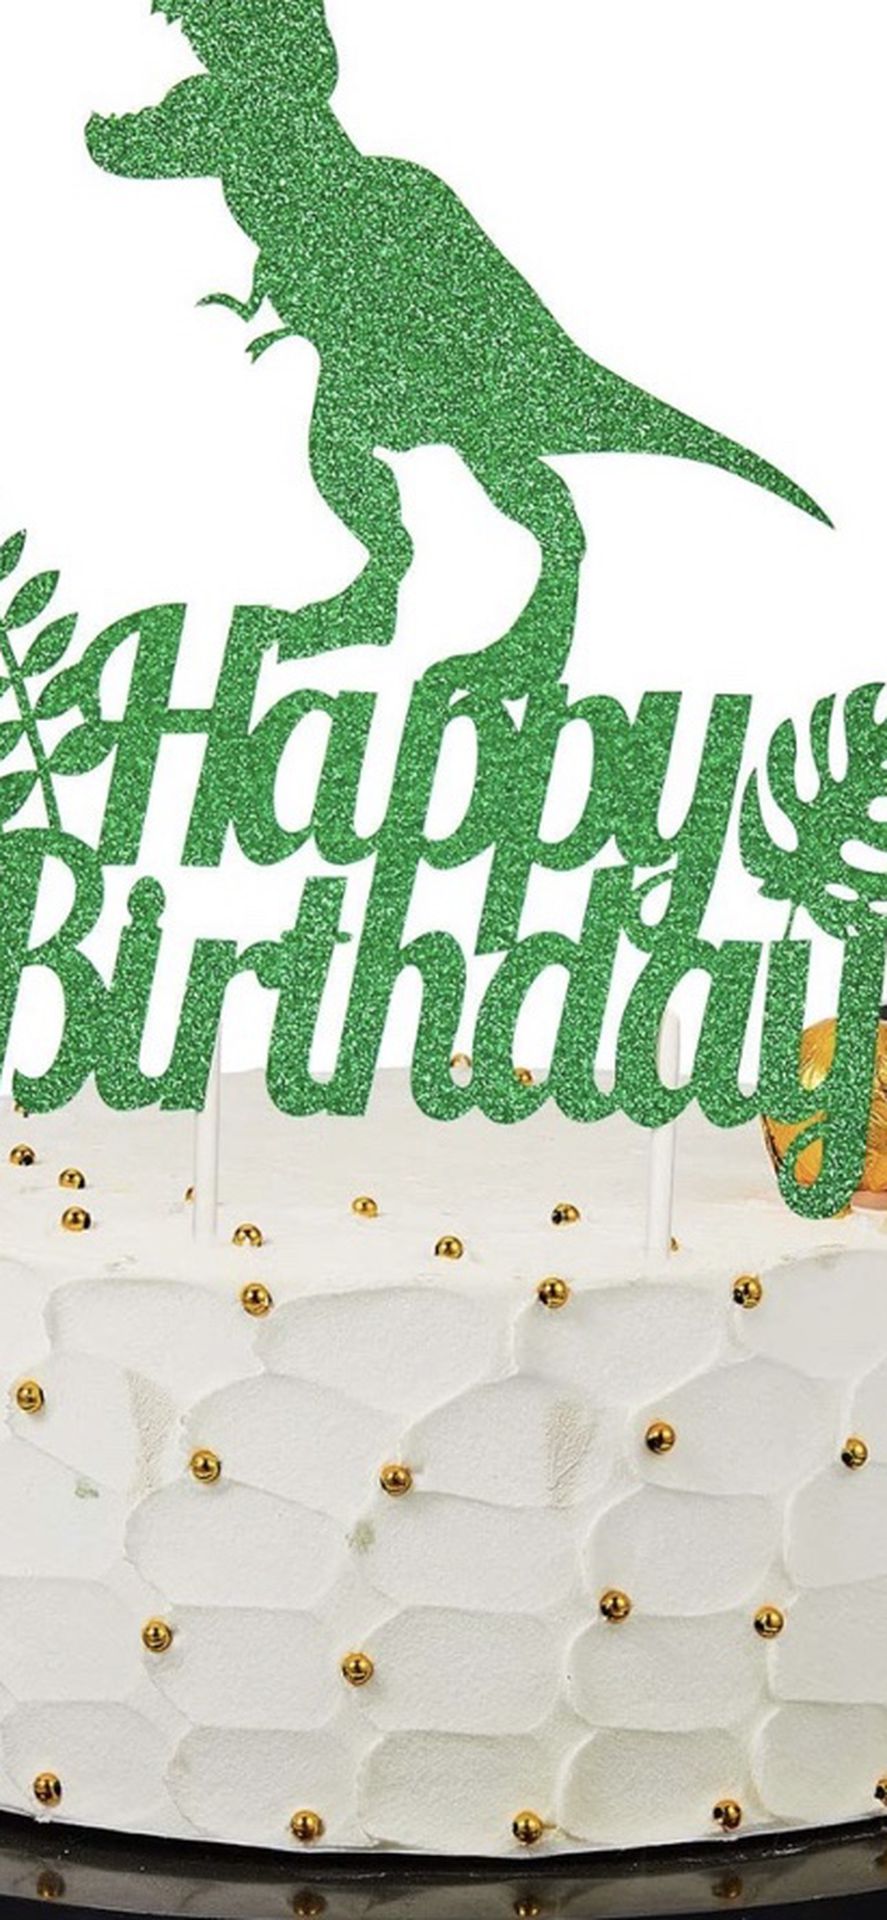 Dinosaur Birthday Cake Cut Out